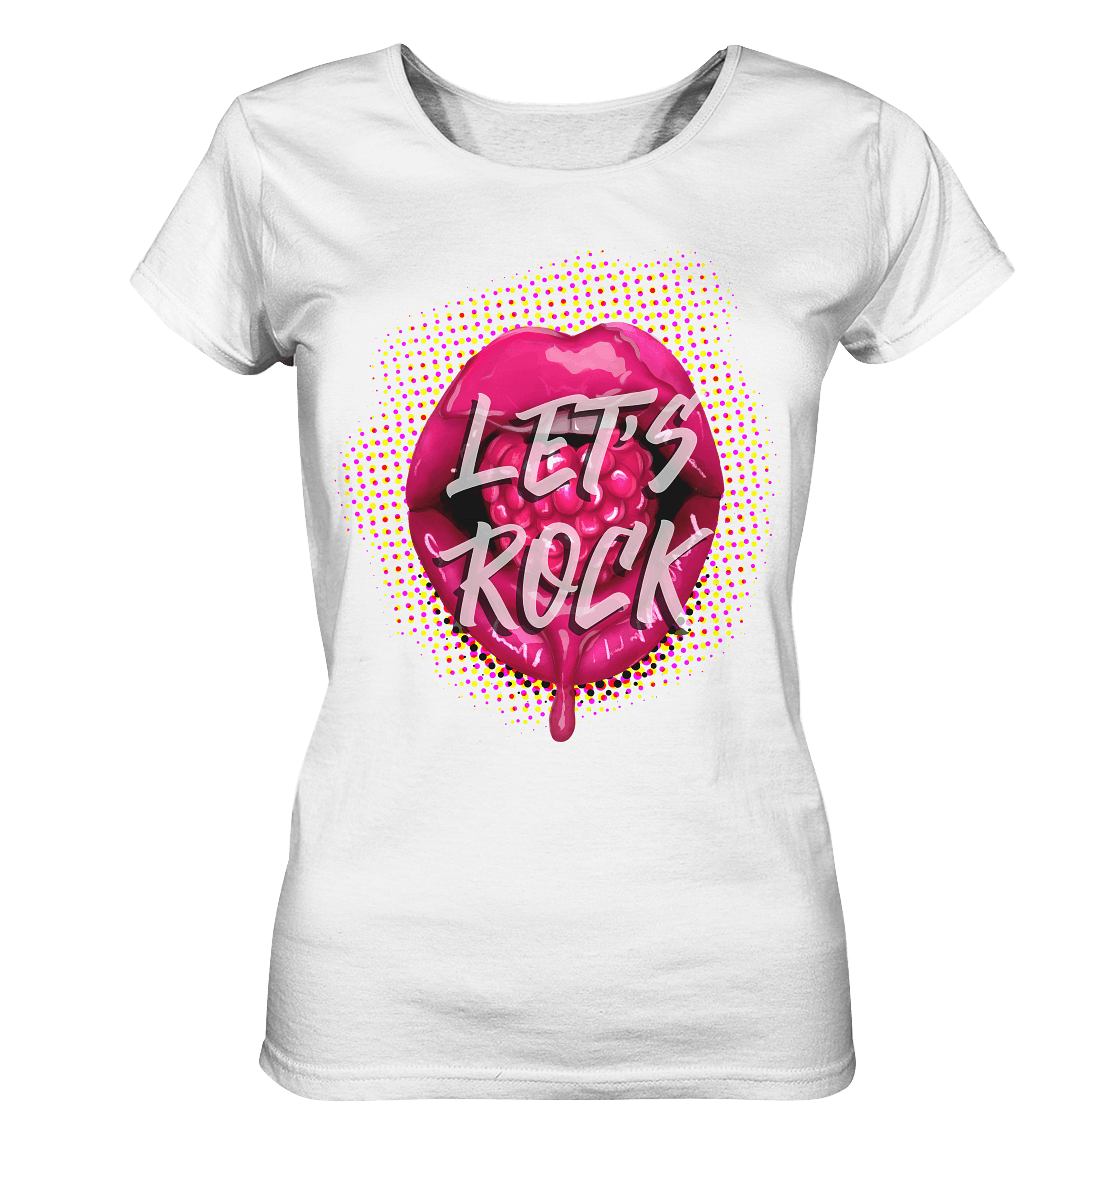 Lets-Rock-sexy-Lips-Pop-T-Shirt-mit-rosa-roten-Lippen